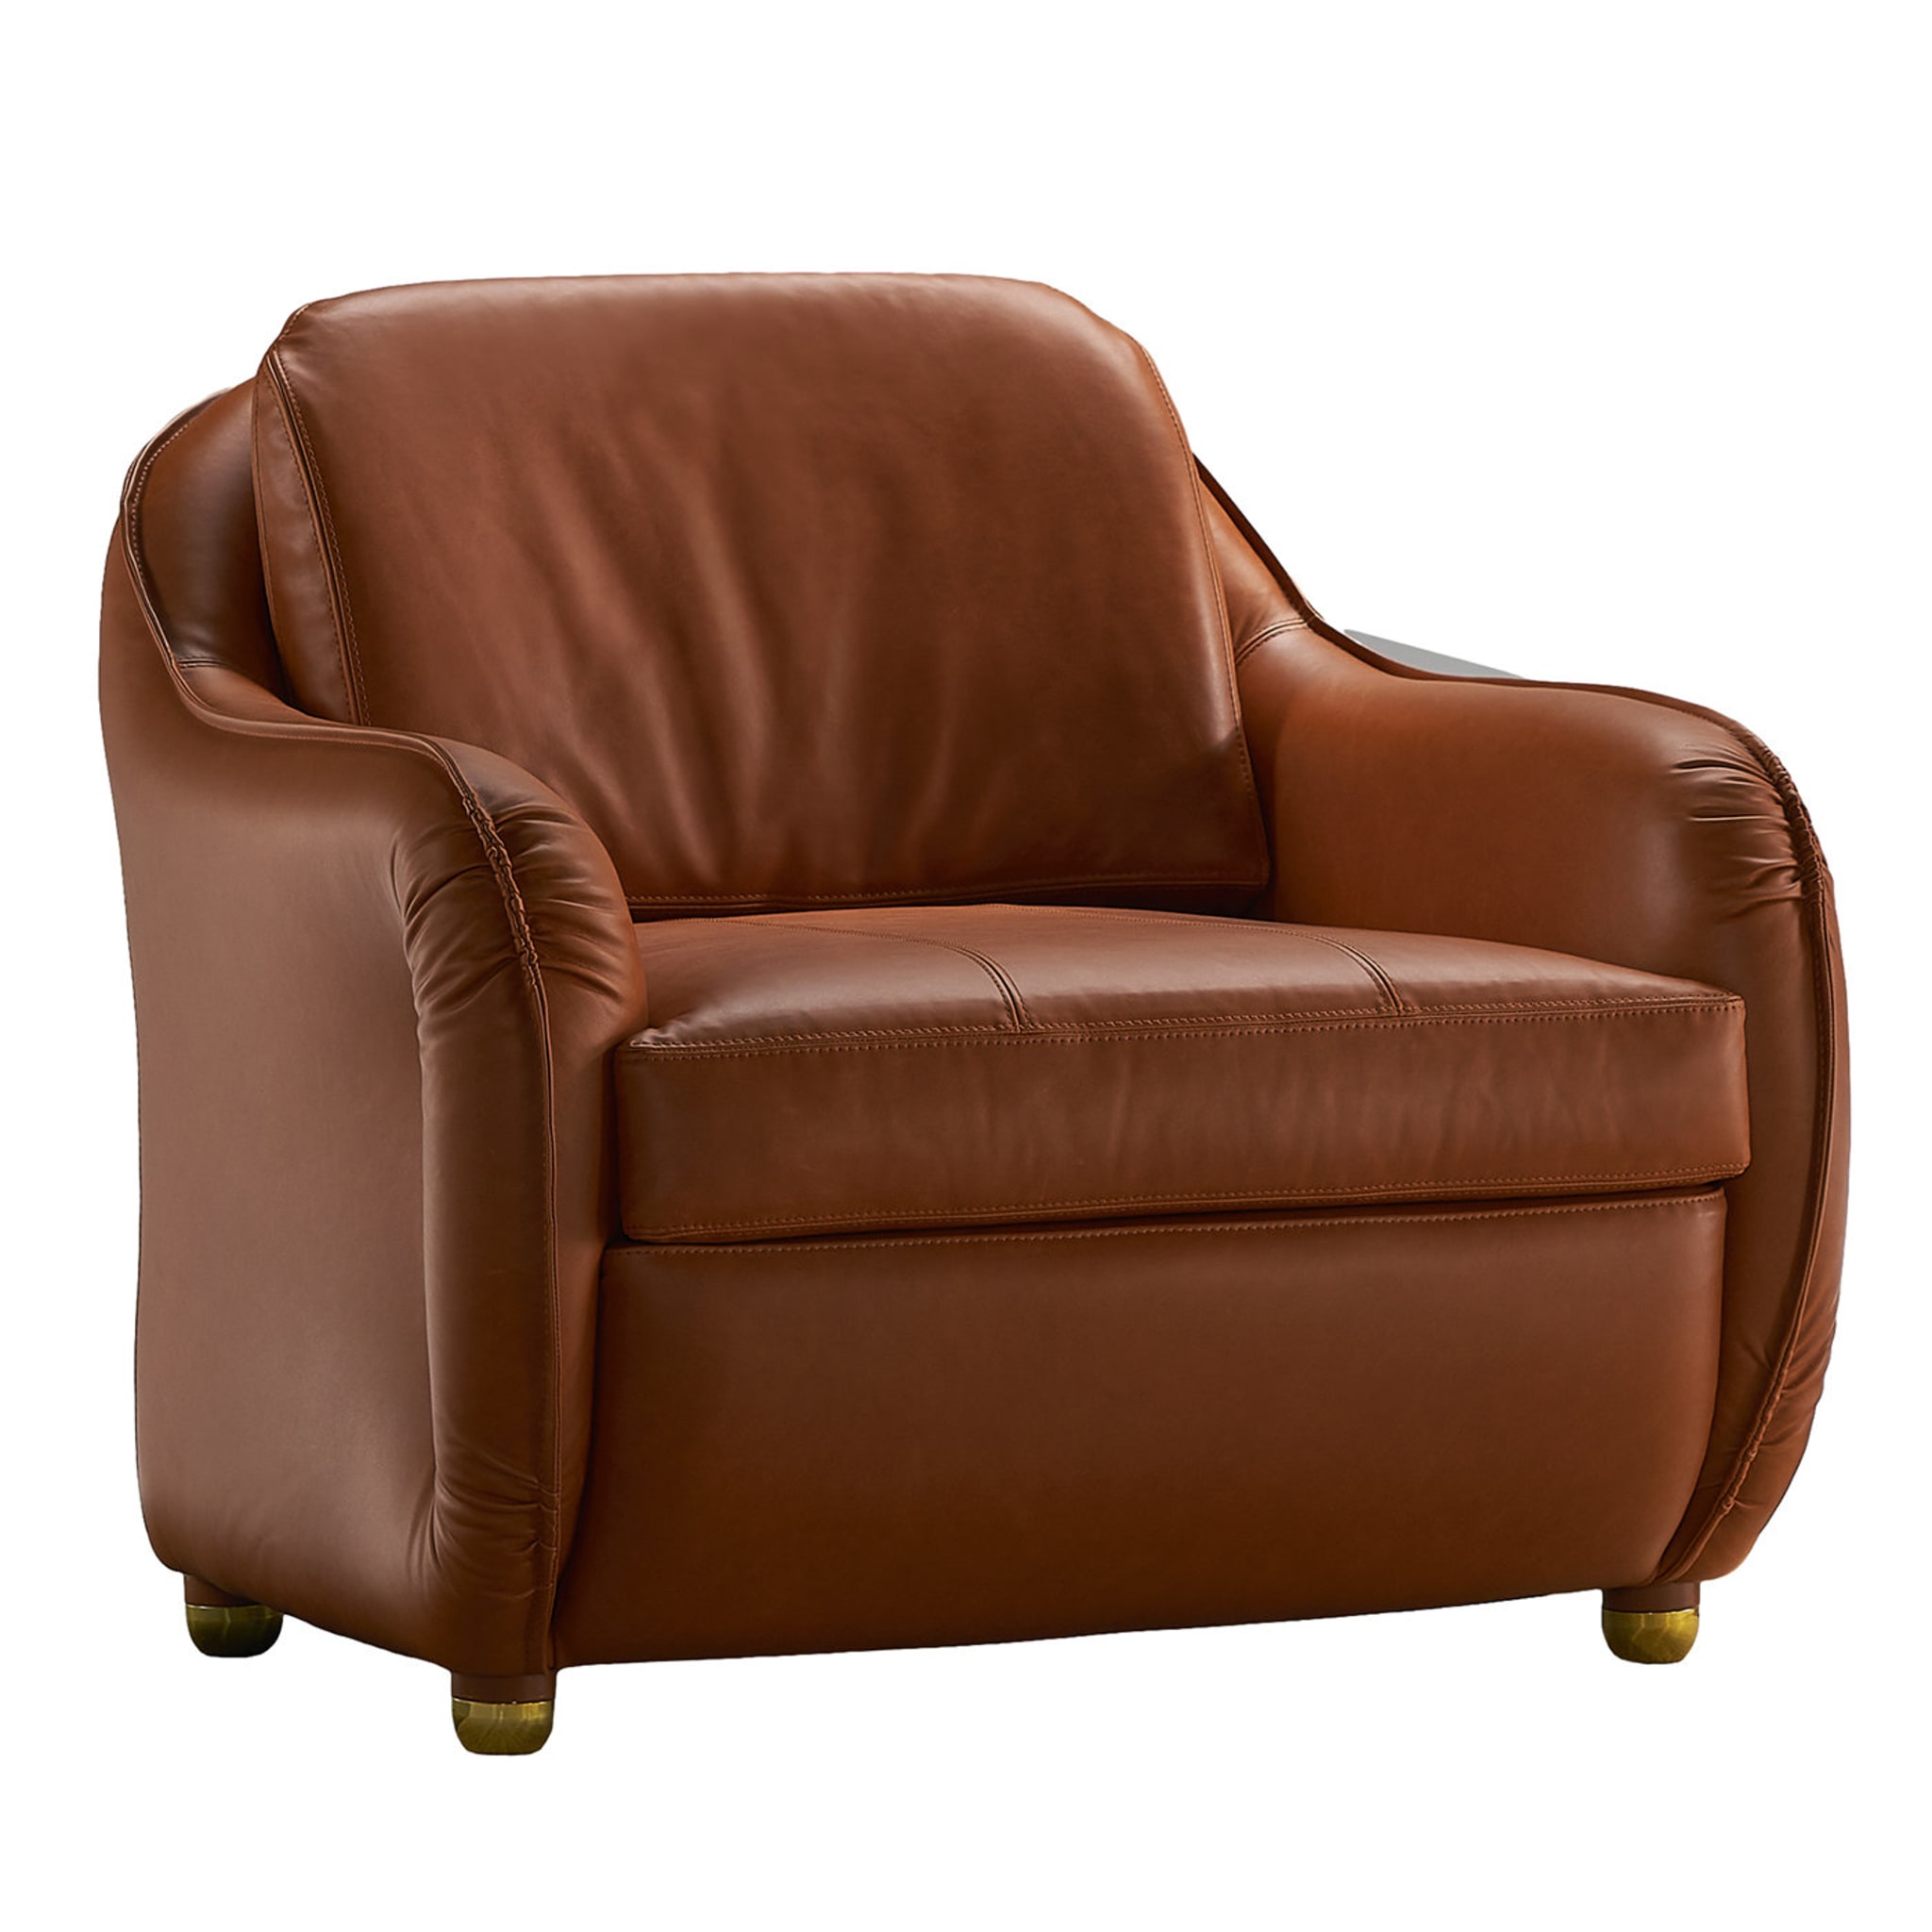 Zana Brown Leather Armchair - Main view